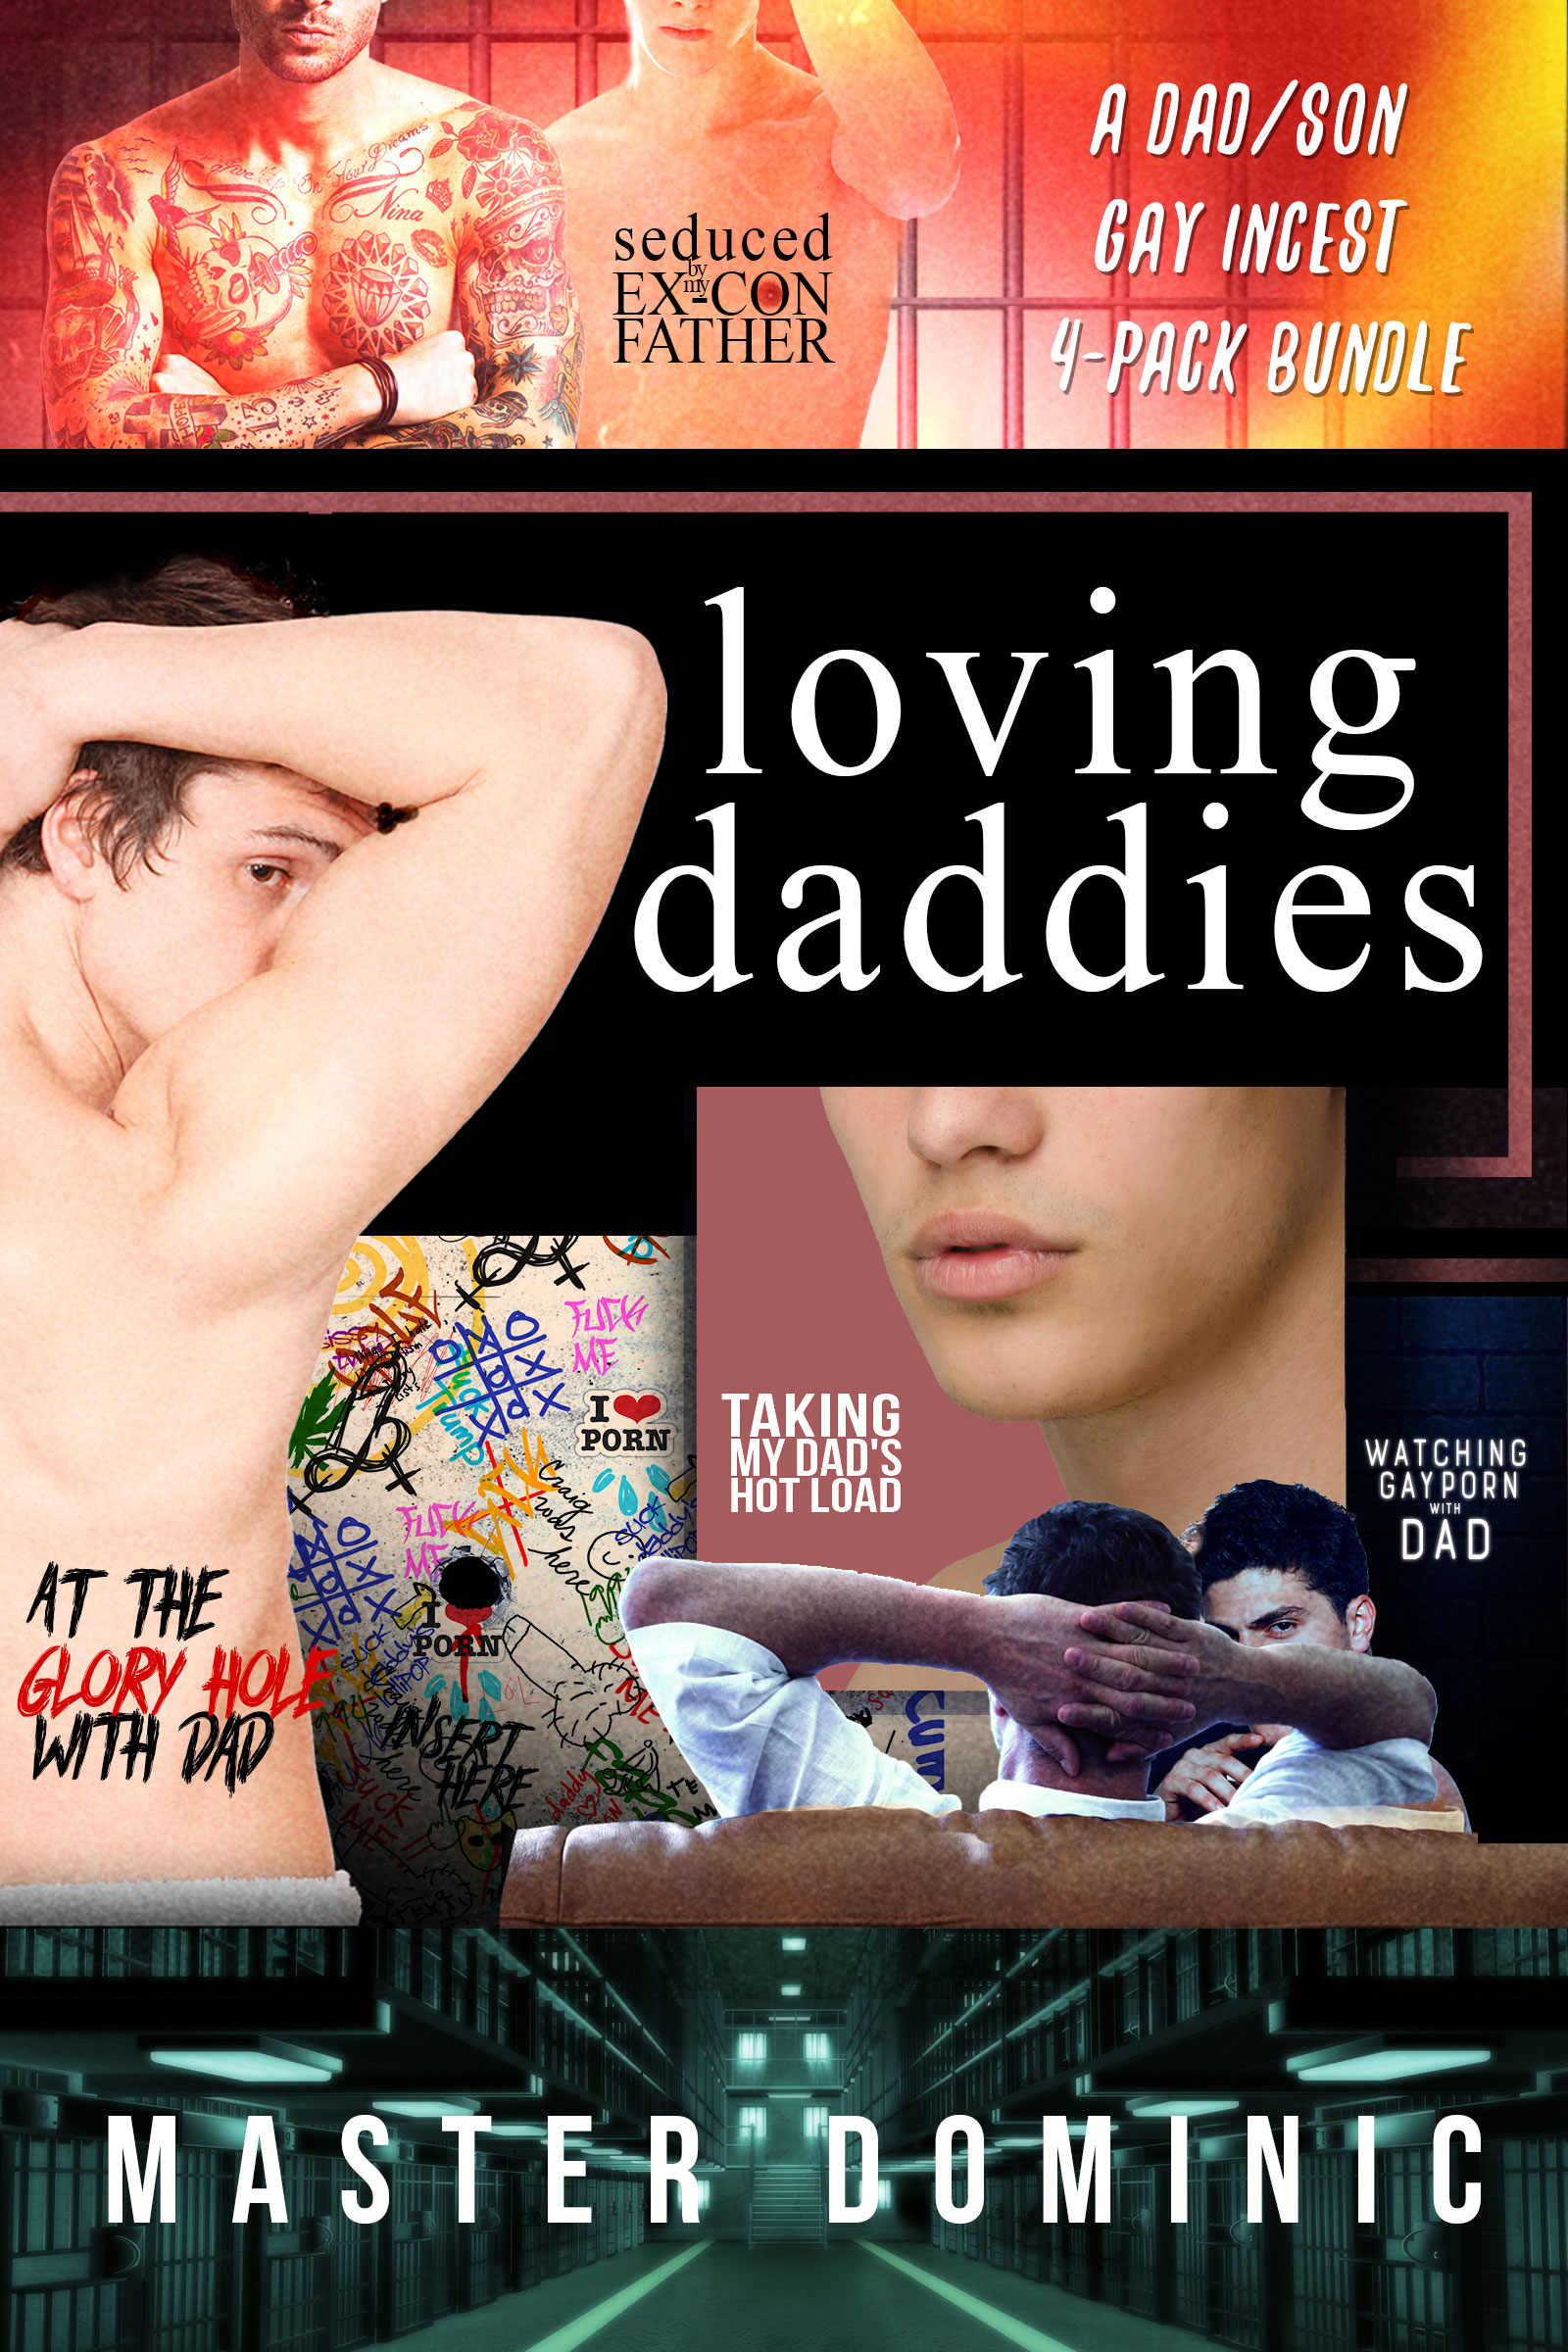 Gay Incest Gay Porn - Smashwords â€“ Loving Daddies: A Dad/Son Gay Incest 4-Pack Bundle â€“ a book by  Master Dominic